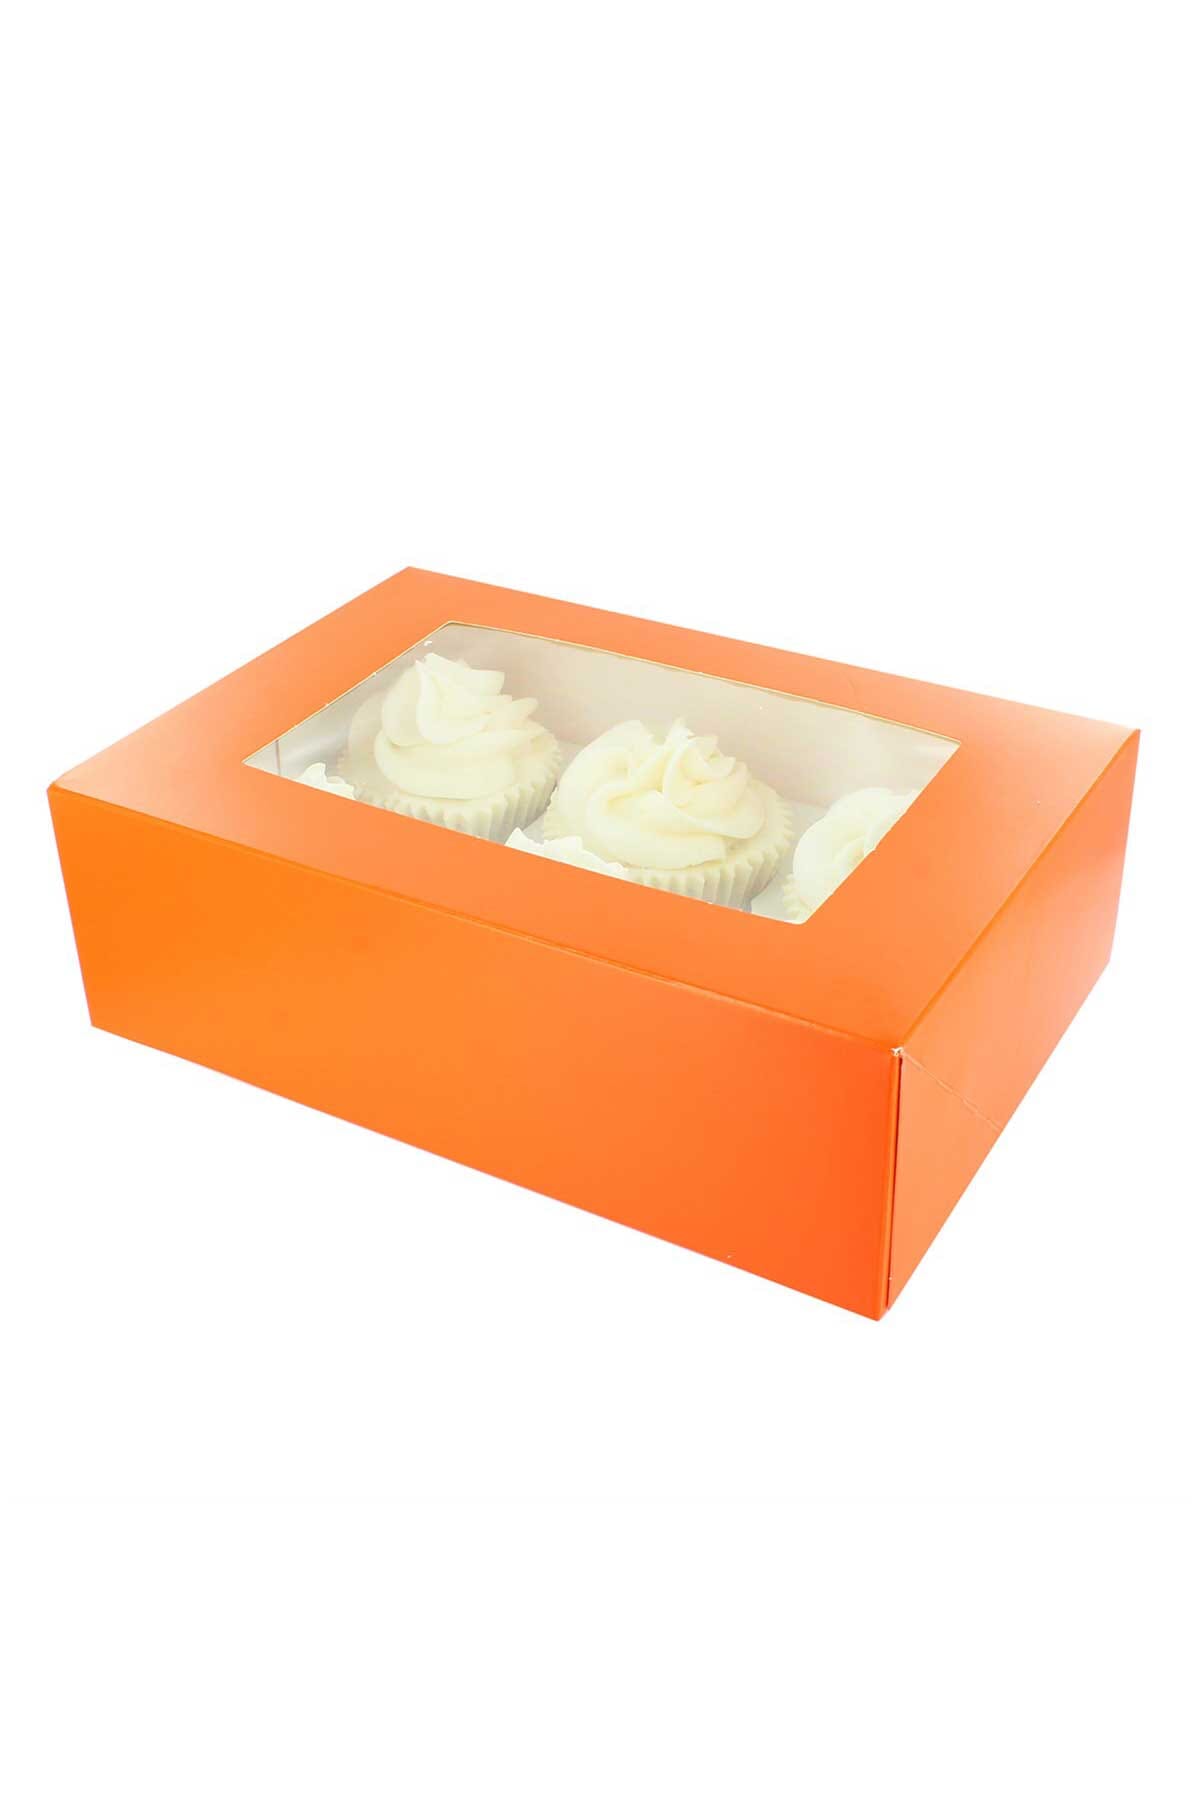 6 Hole Cupcake Box - Tangerine Orange Cake Box Sprinkly 